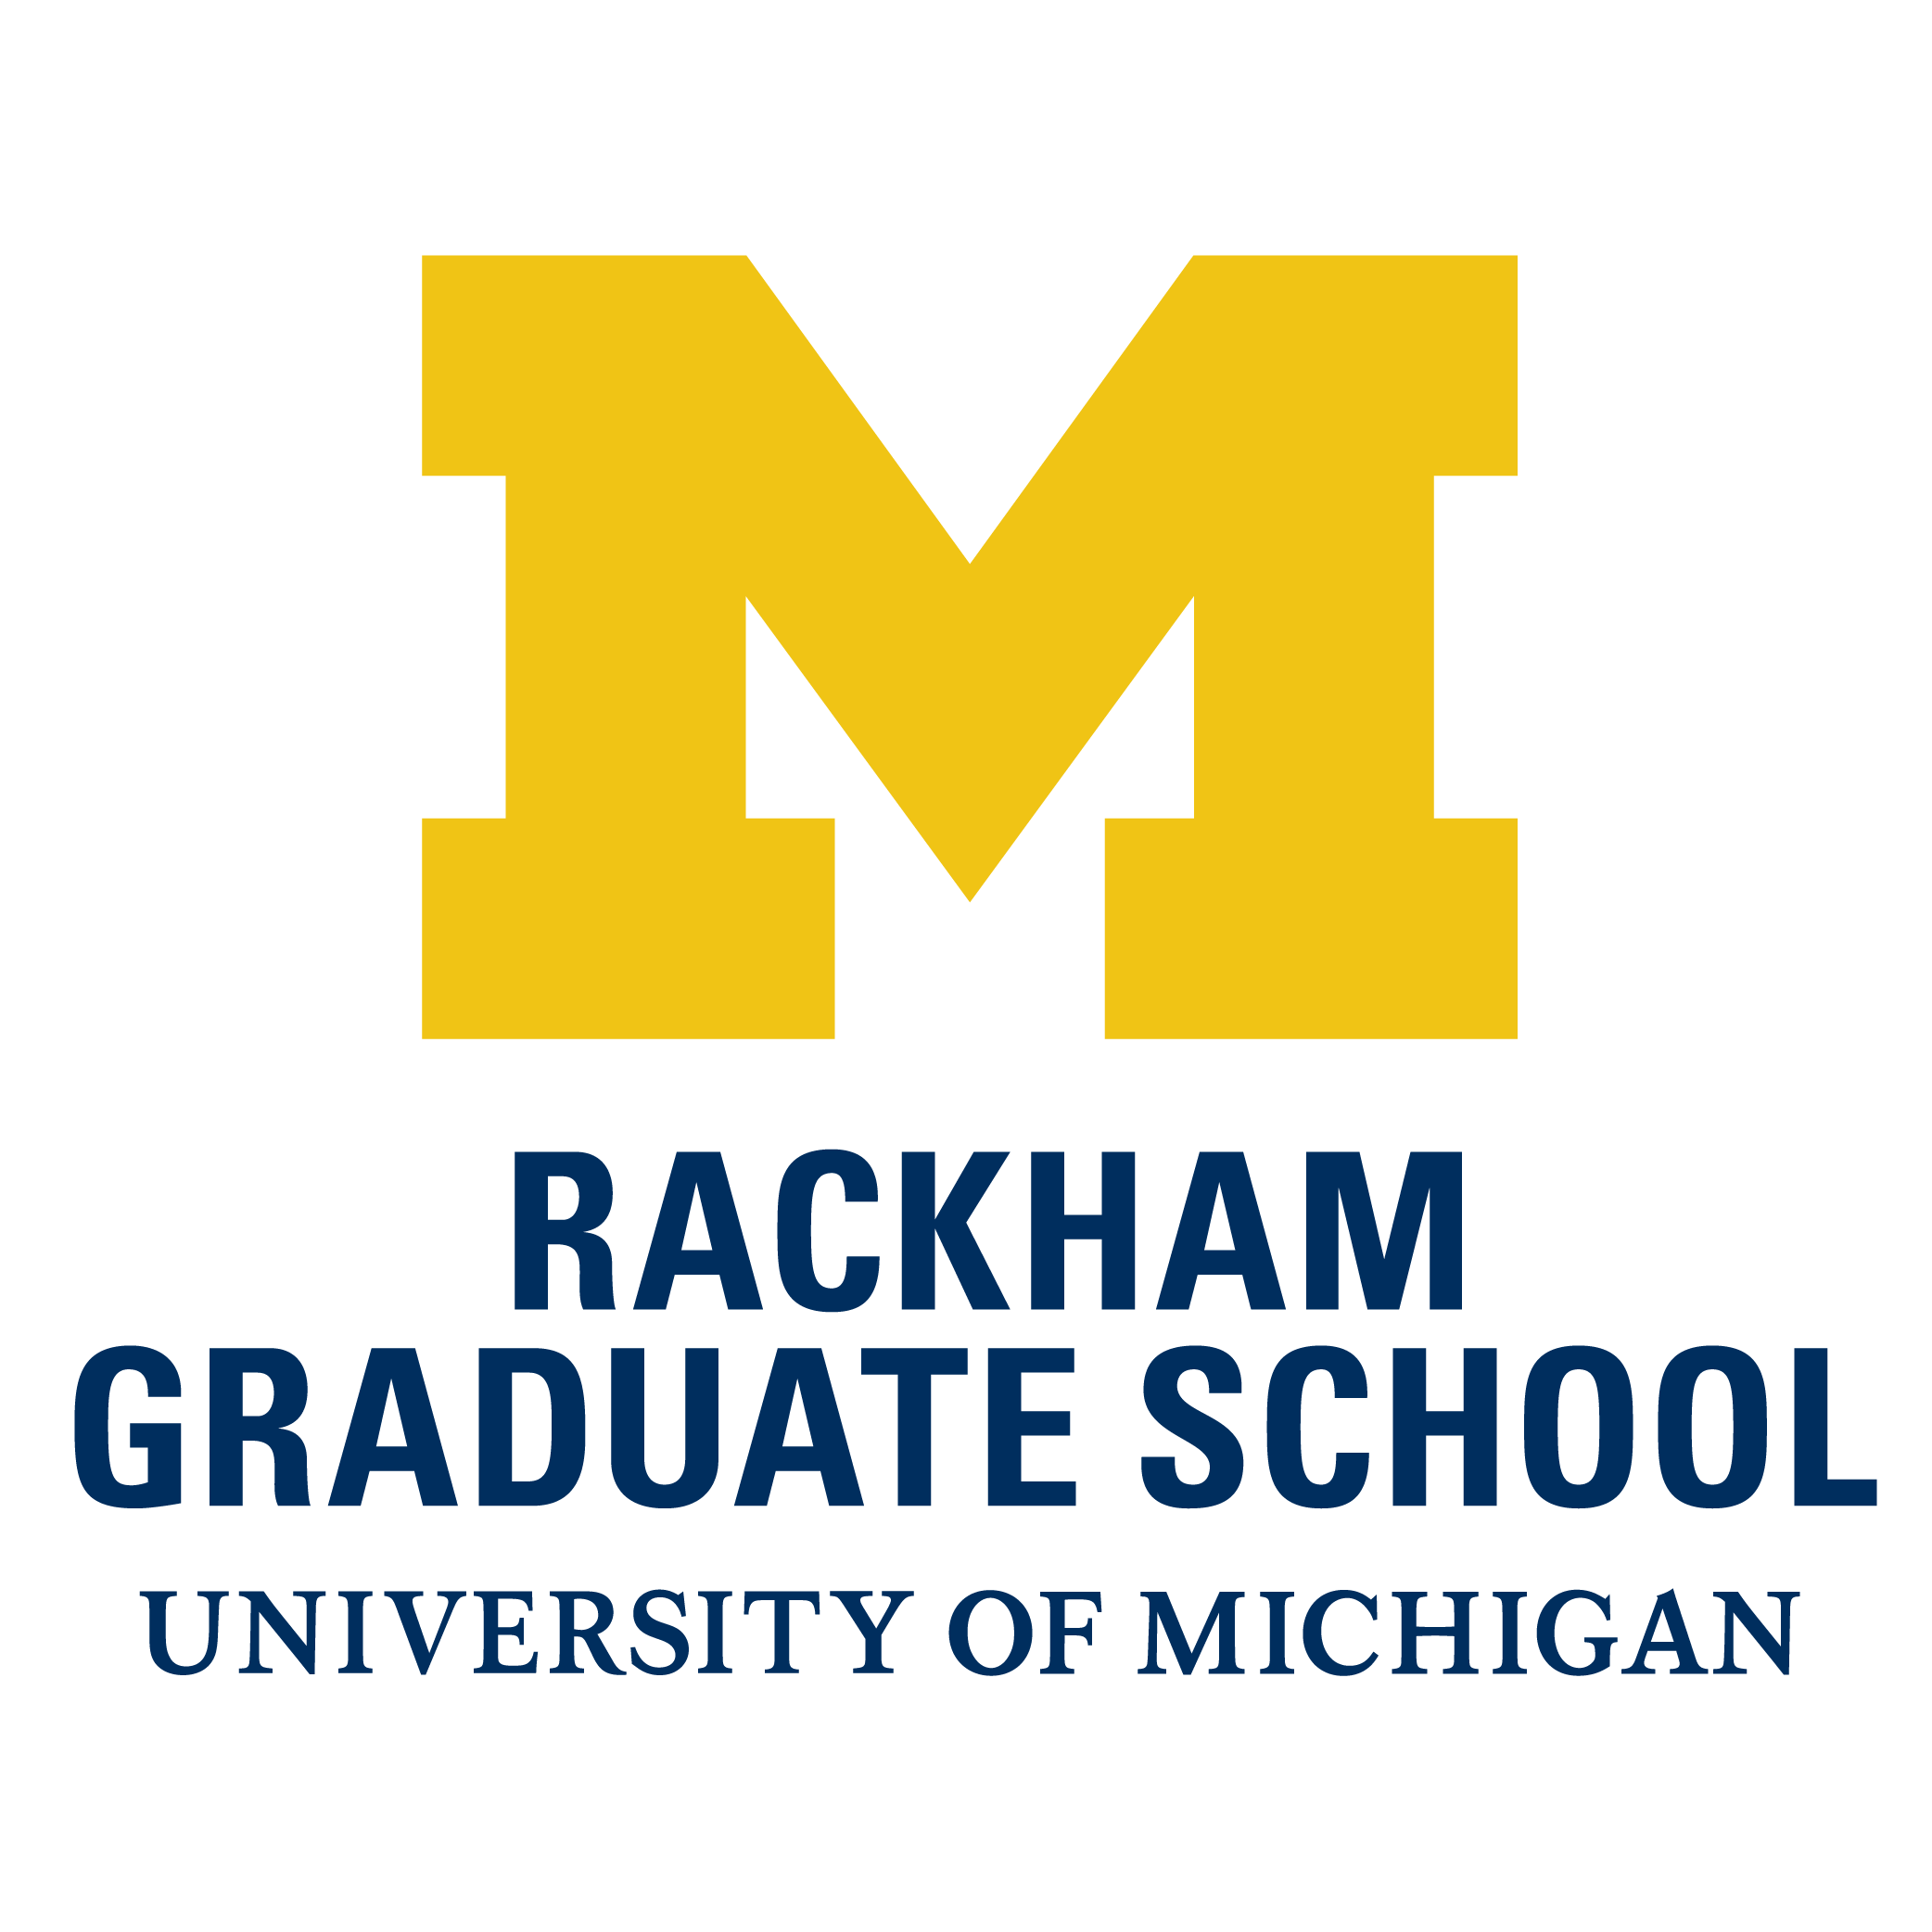 Rackham Graduate School logo